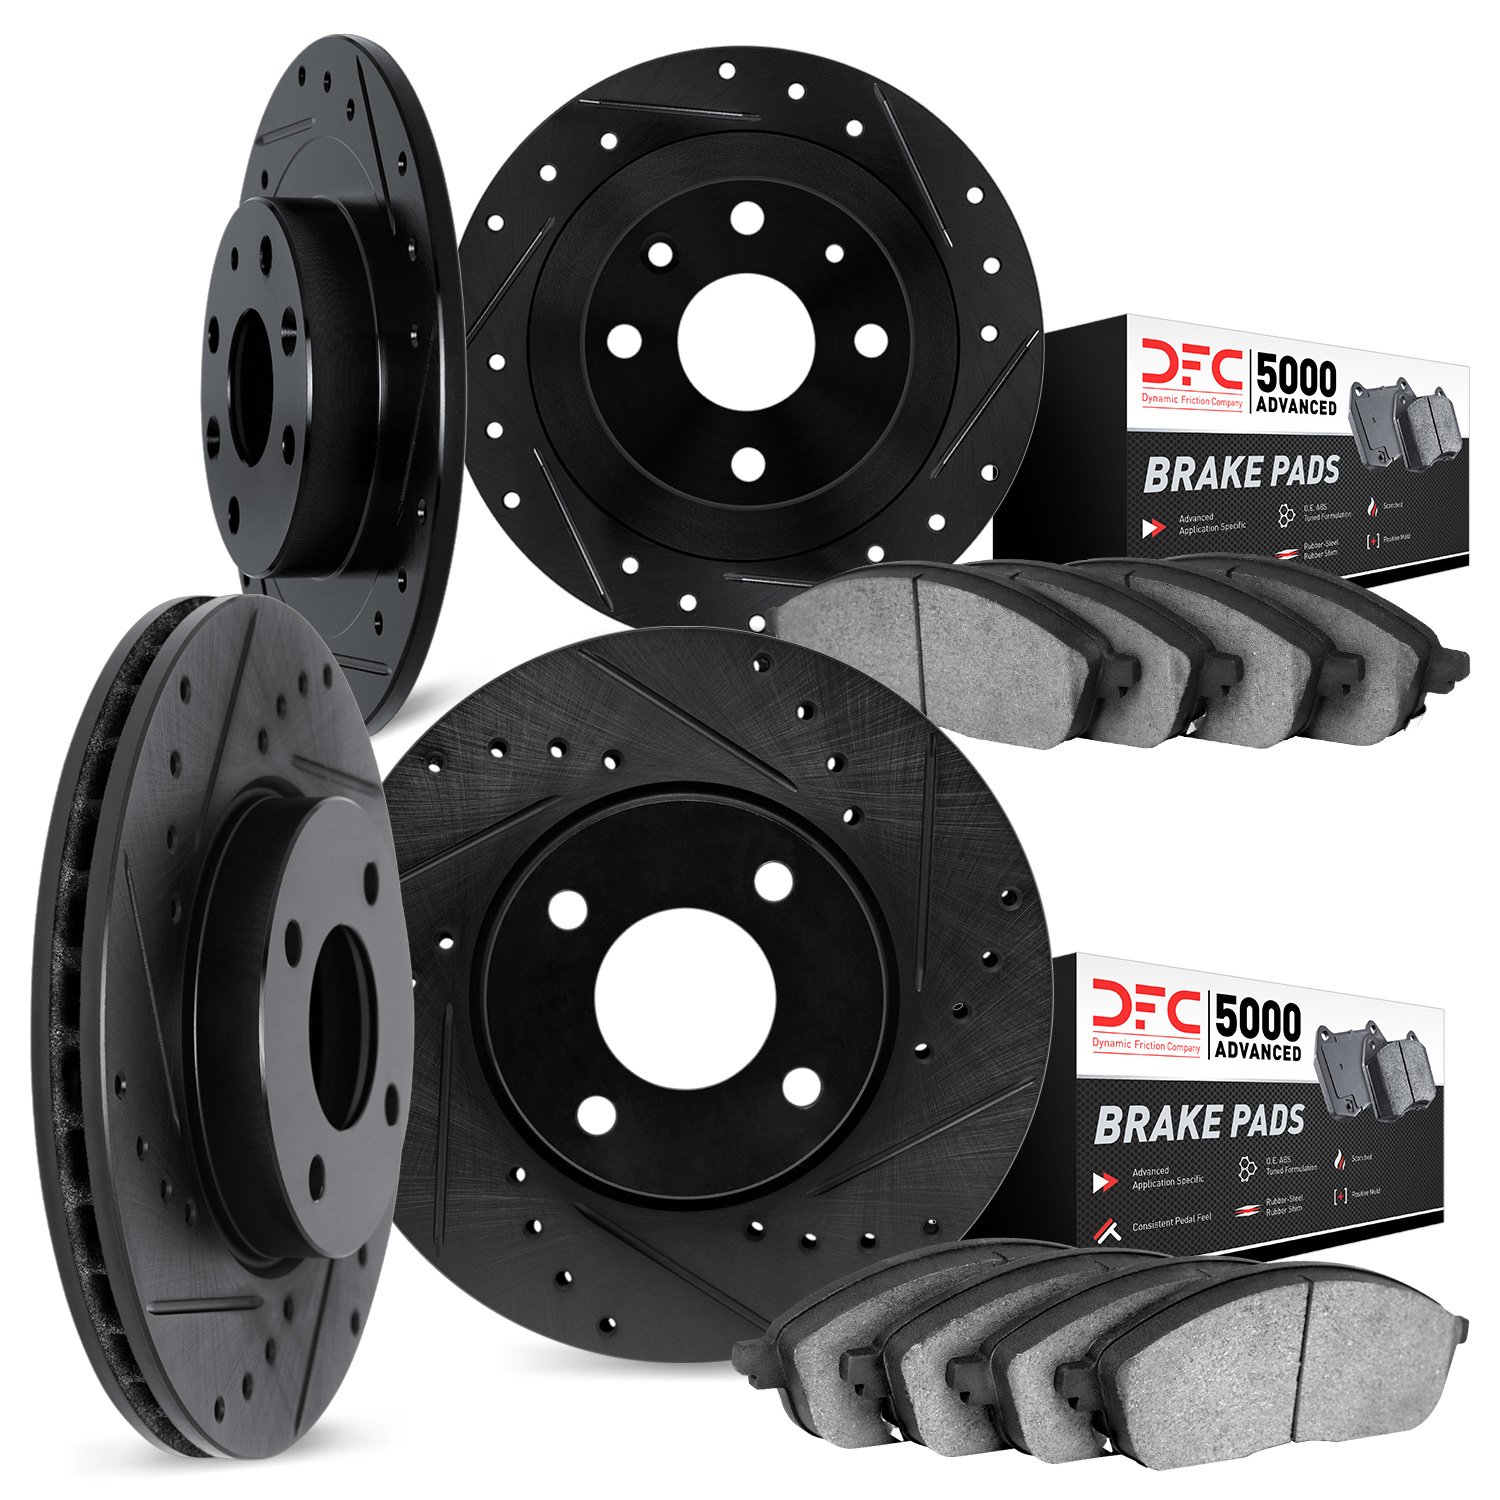 8504-07000 Drilled/Slotted Brake Rotors w/5000 Advanced Brake Pads Kit [Black], 2012-2019 Mopar, Position: Front and Rear